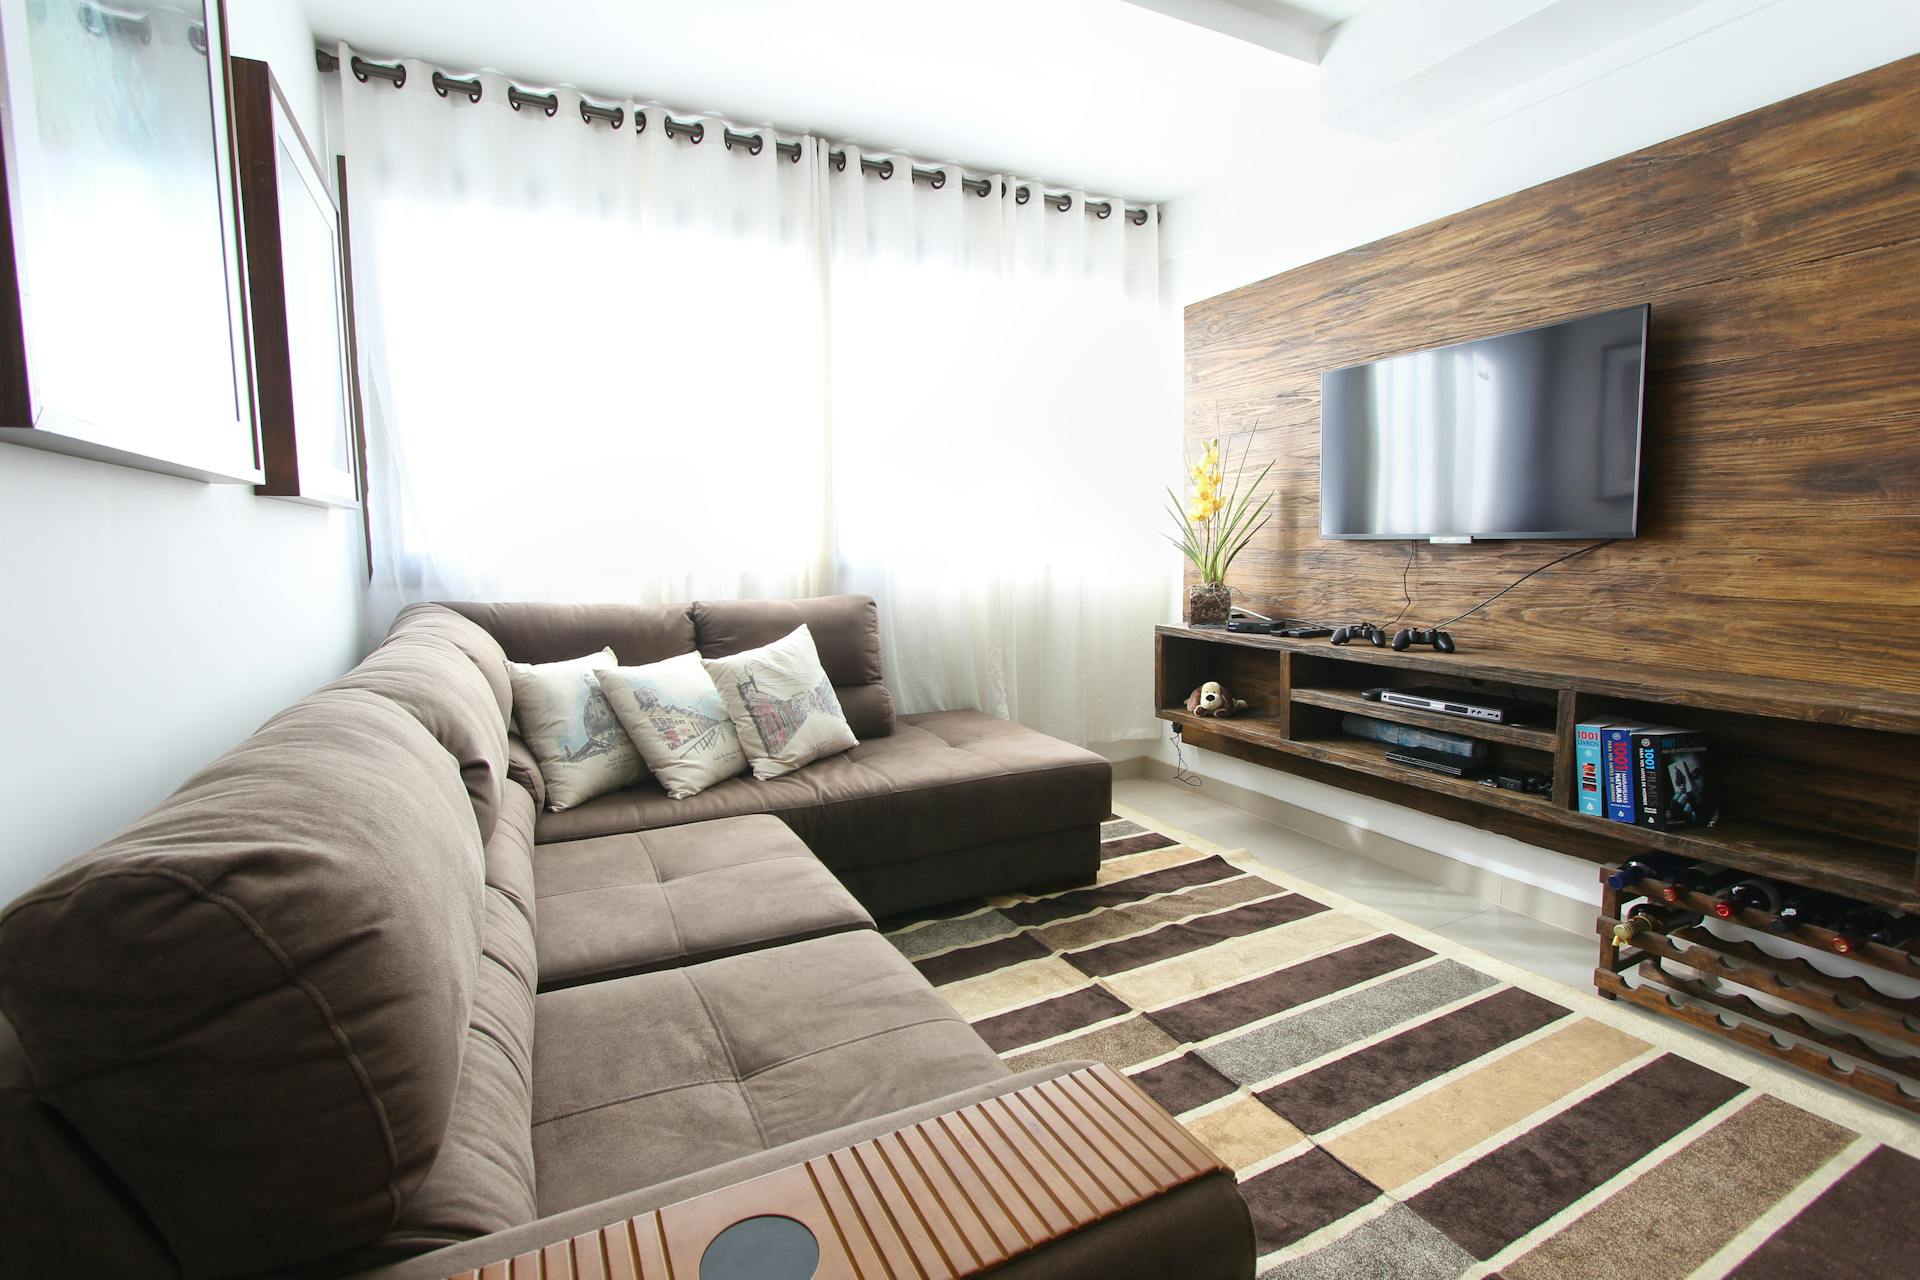 TV in a living room | Source: Pexels